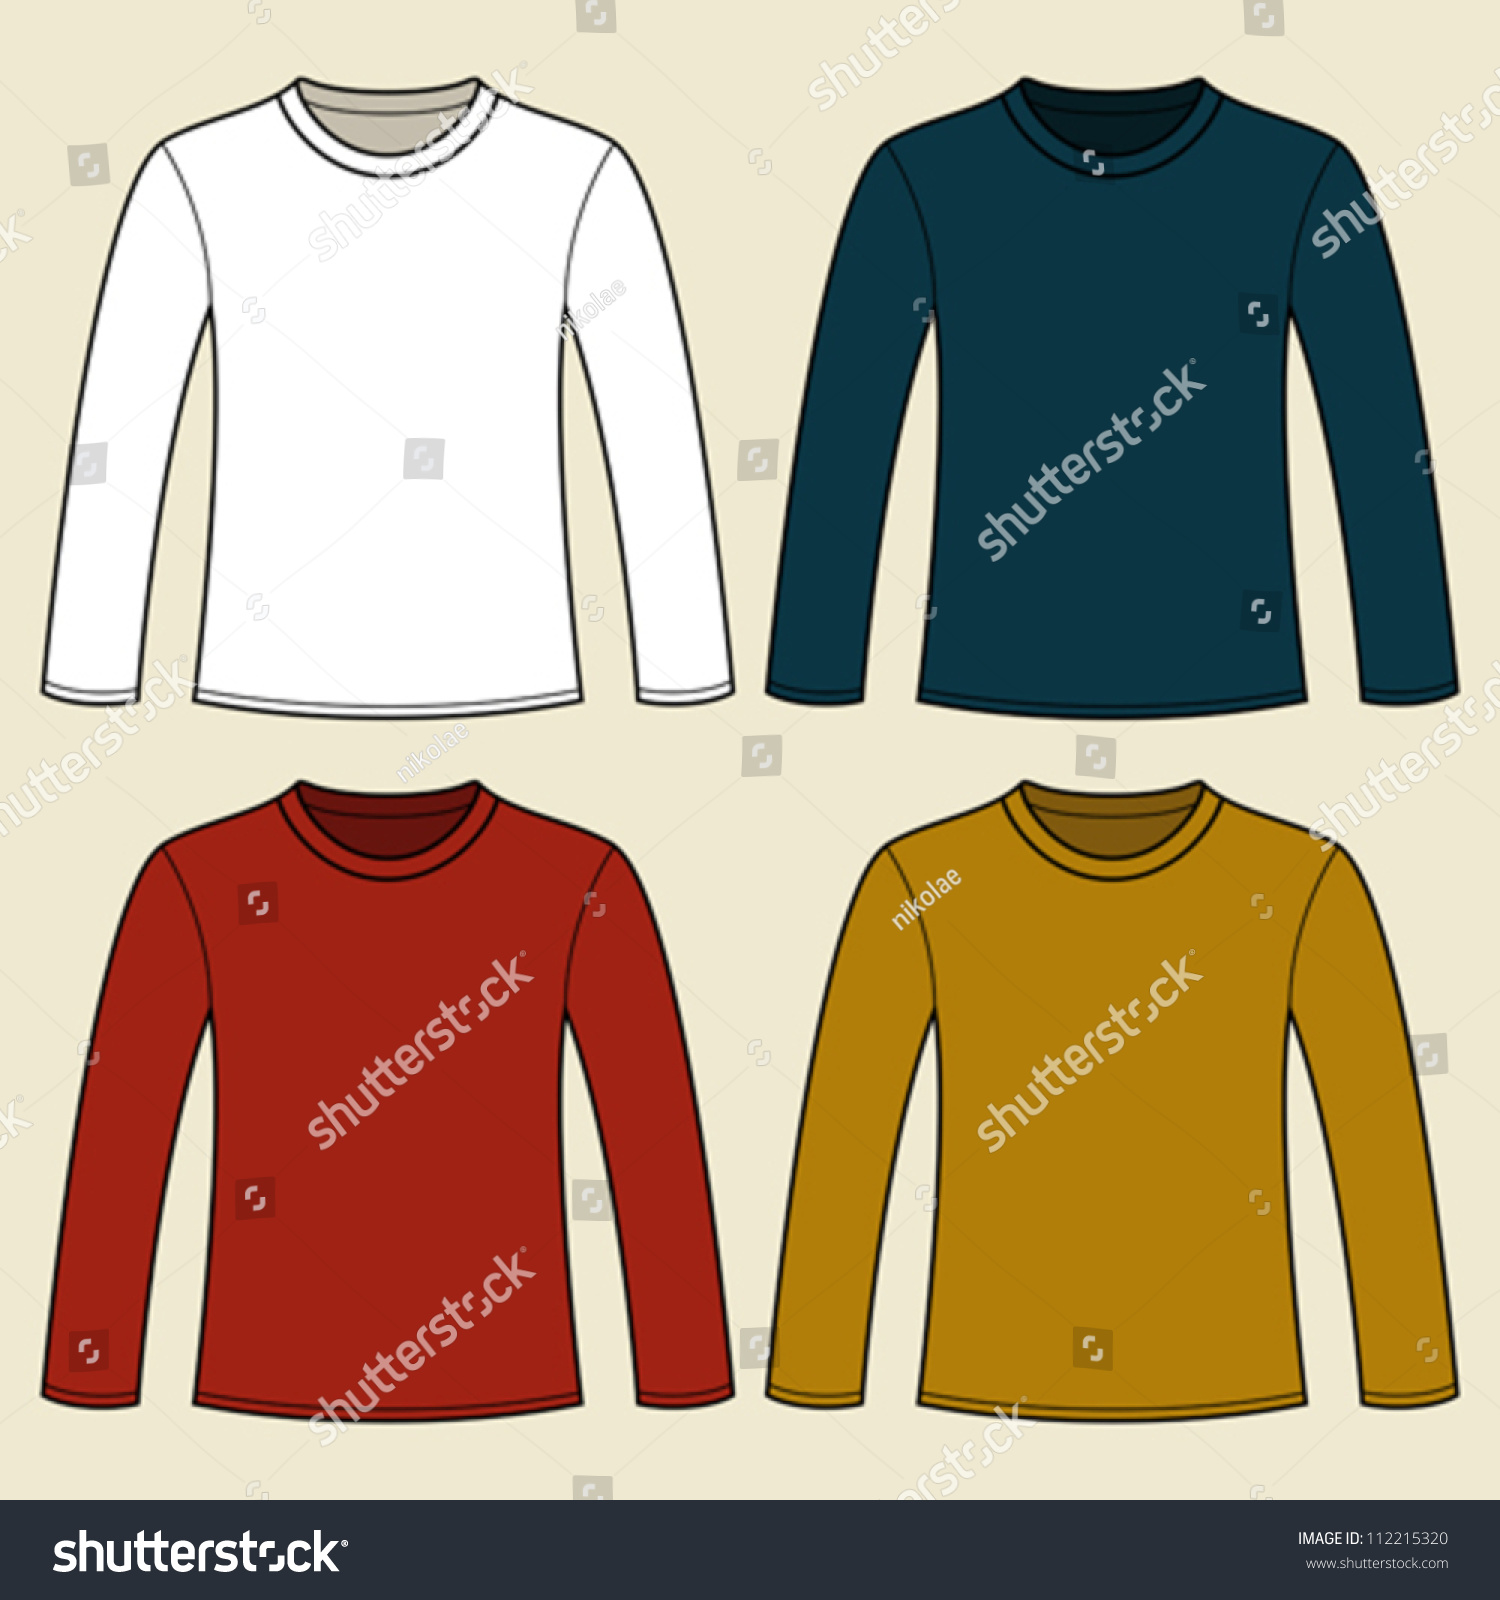 Long-Sleeved T-Shirt Template Stock Vector Illustration 112215320 ...